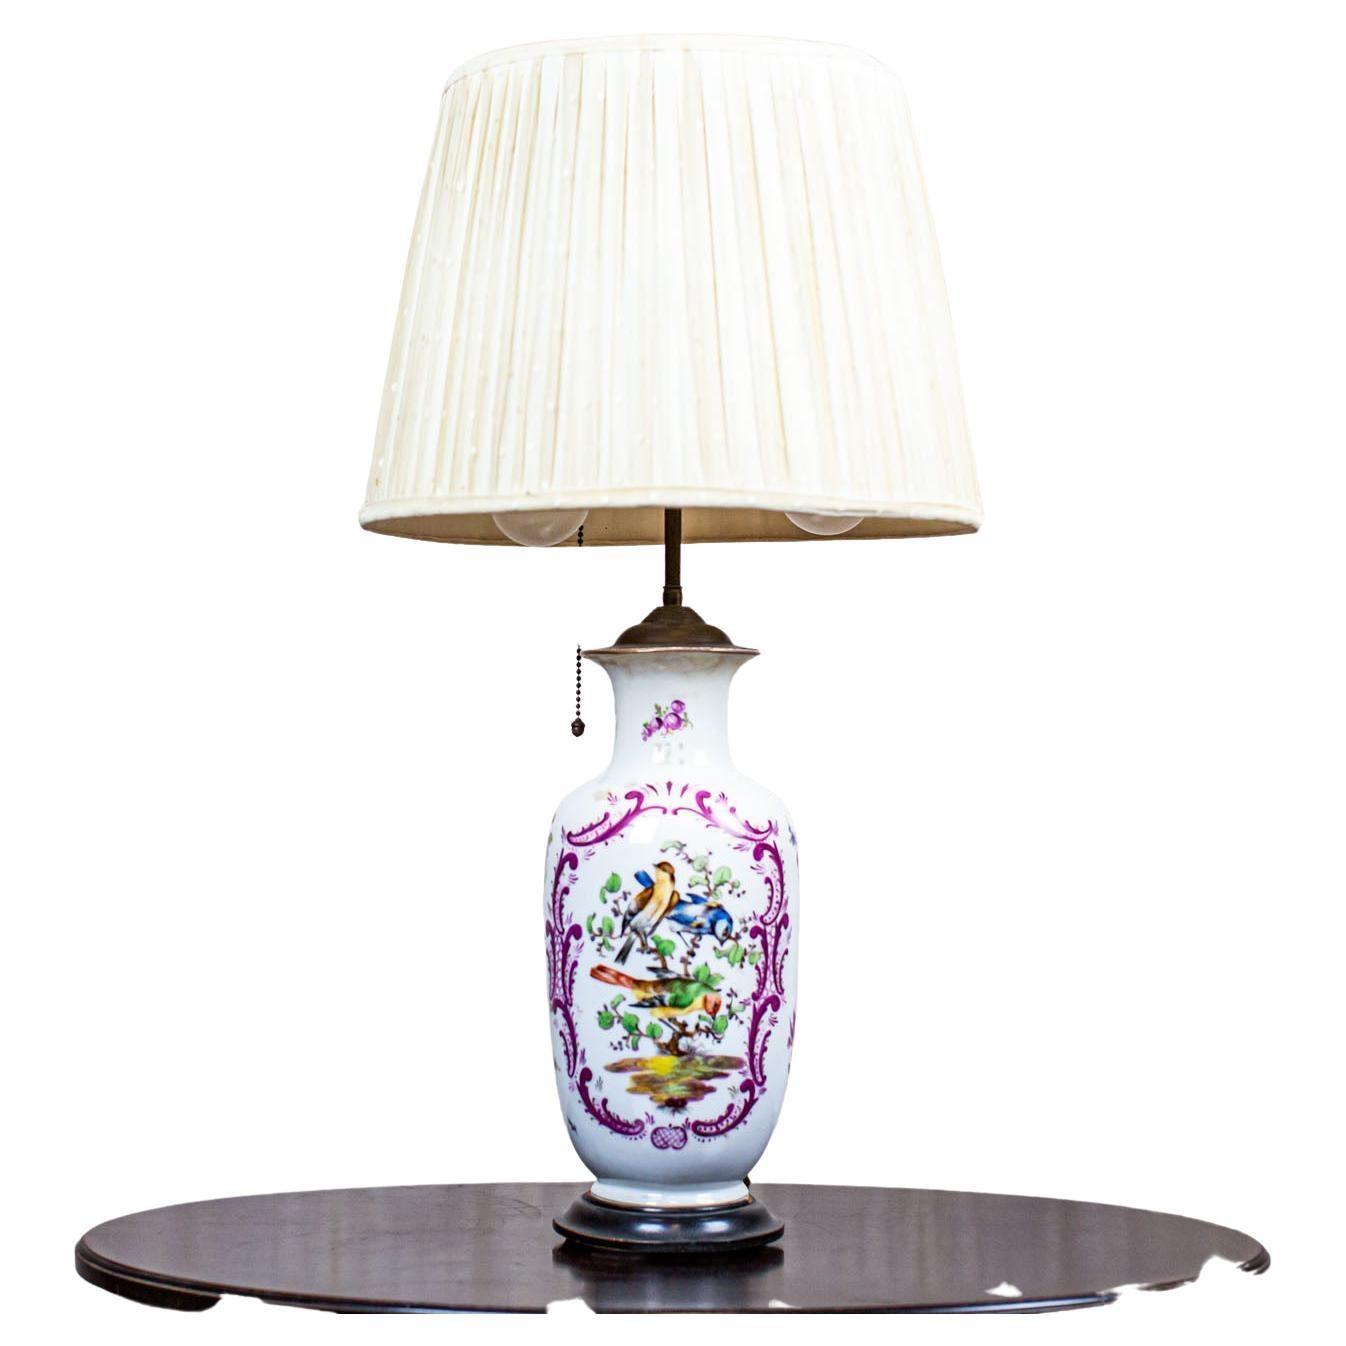 Electric Table Lampe des 20. Jahrhunderts mit dekorativem Keramiksockel